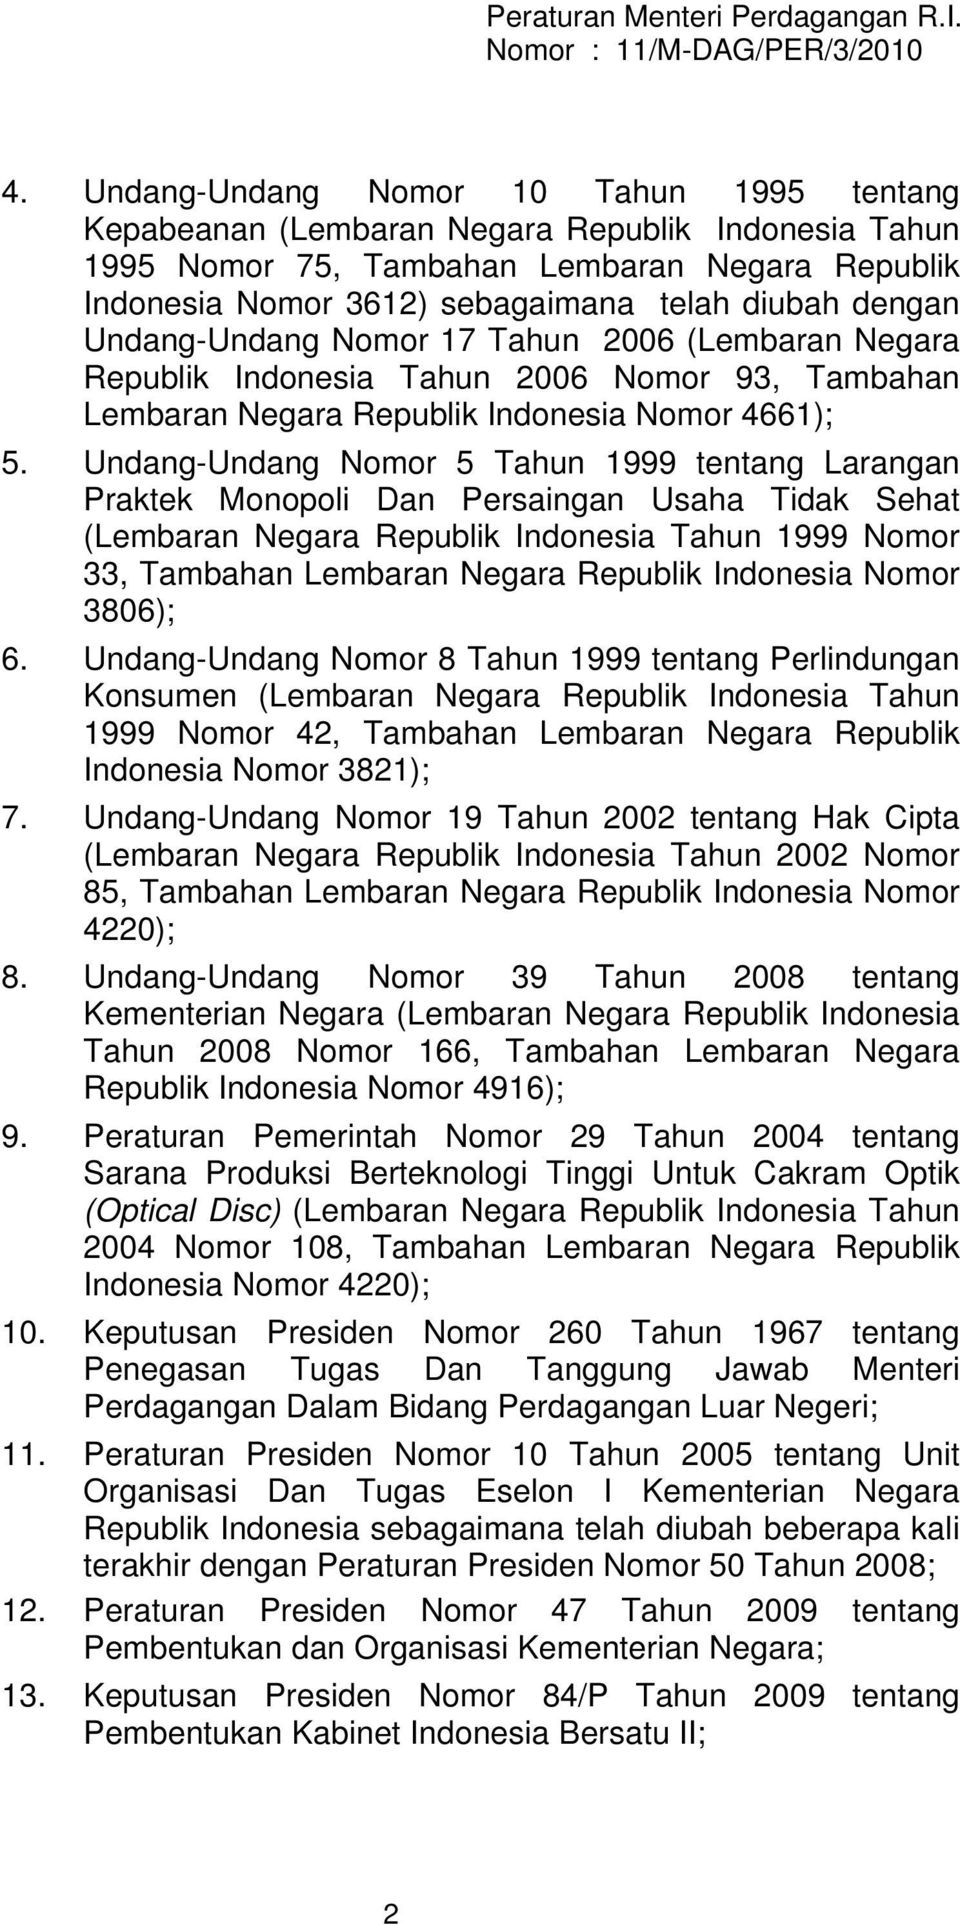 Undang-Undang Nomor 5 Tahun 1999 tentang Larangan Praktek Monopoli Dan Persaingan Usaha Tidak Sehat (Lembaran Negara Republik Indonesia Tahun 1999 Nomor 33, Tambahan Lembaran Negara Republik